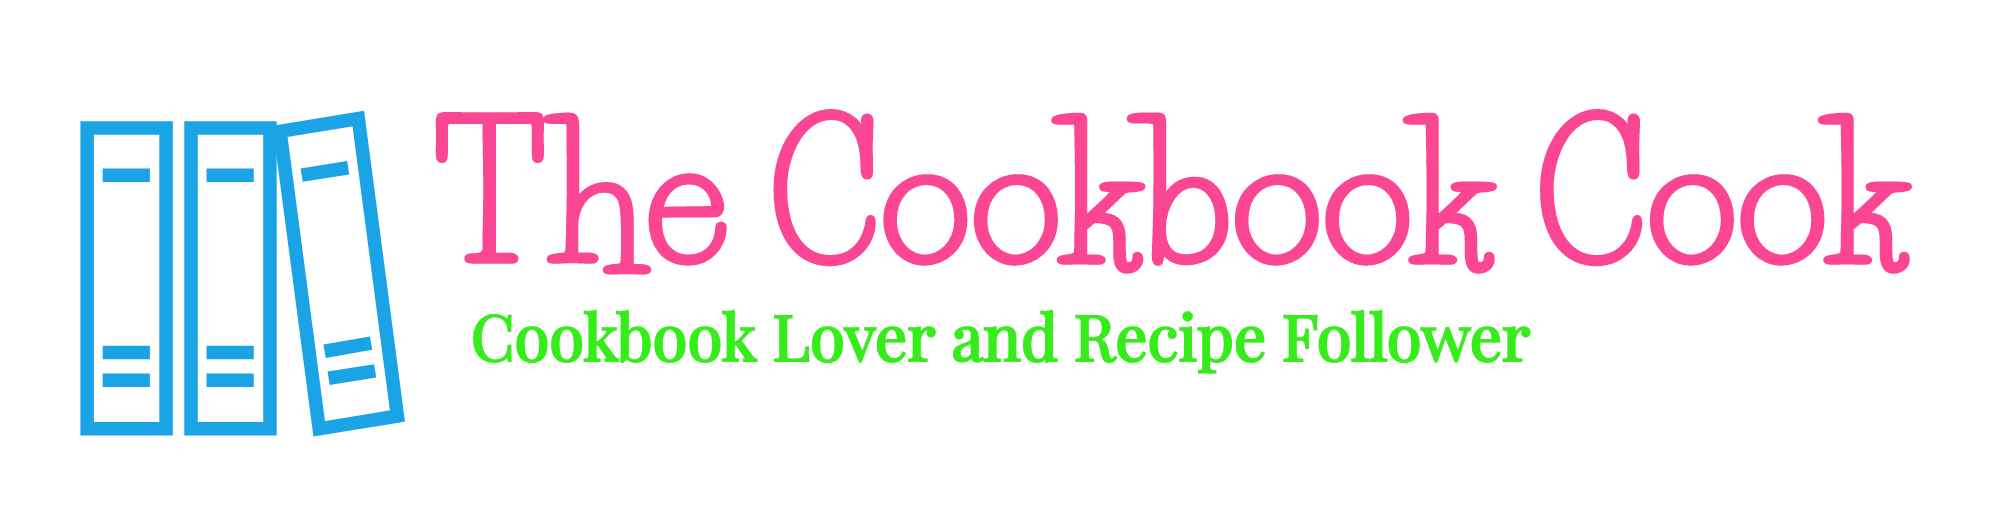 The Cookbook Cook